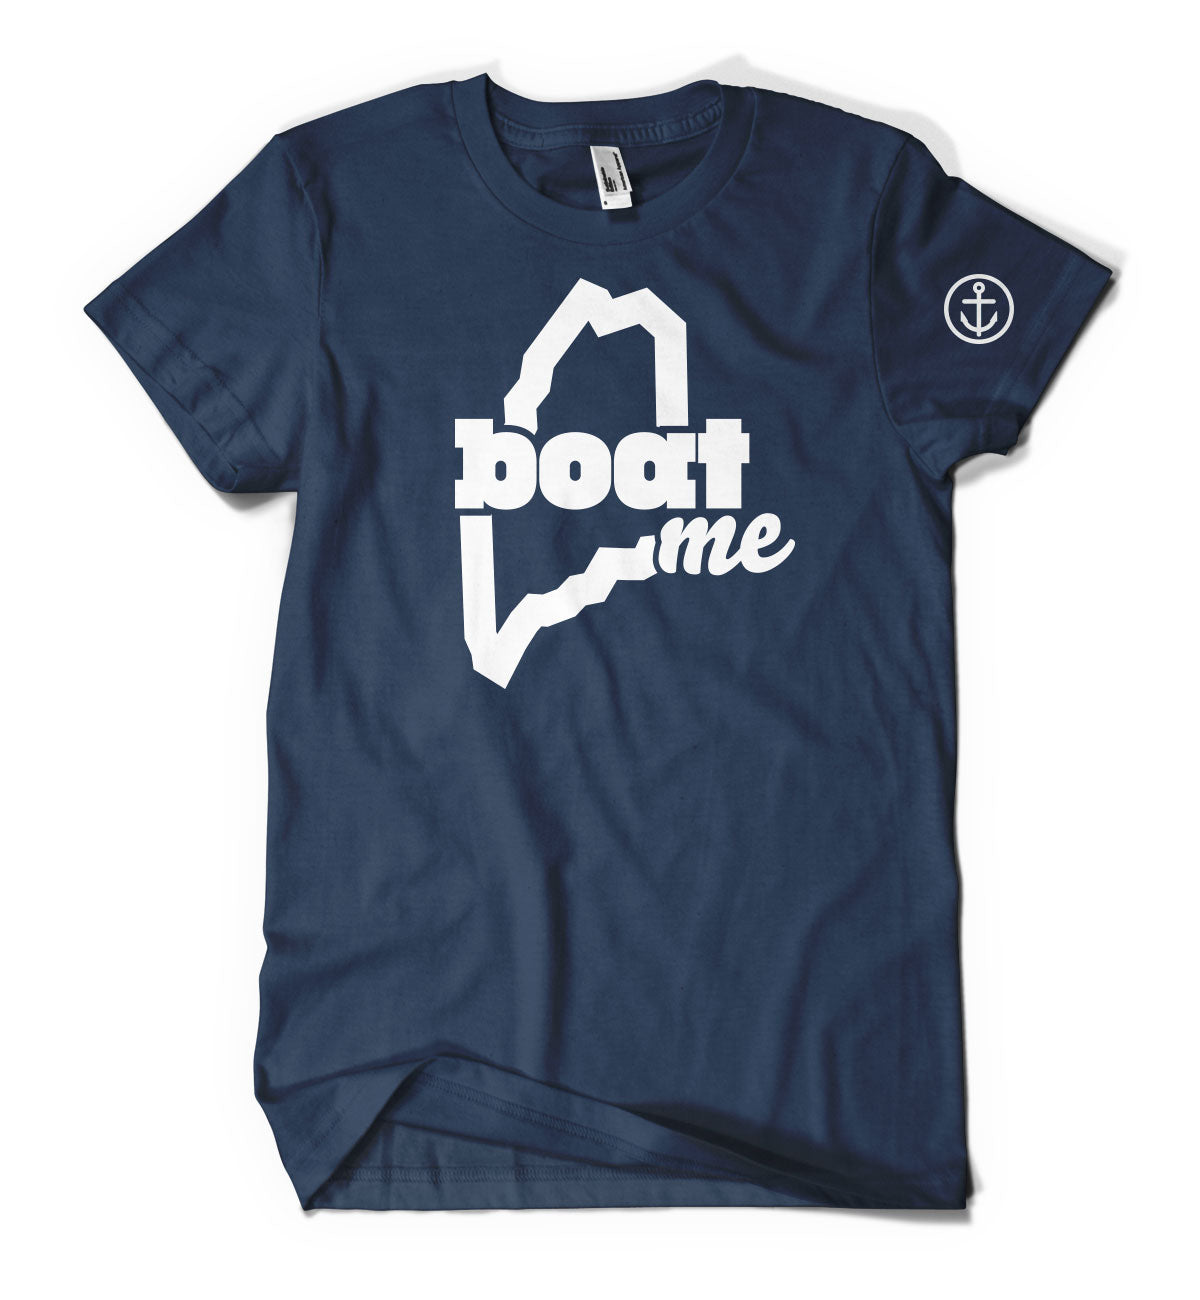 BoatME T-shirt